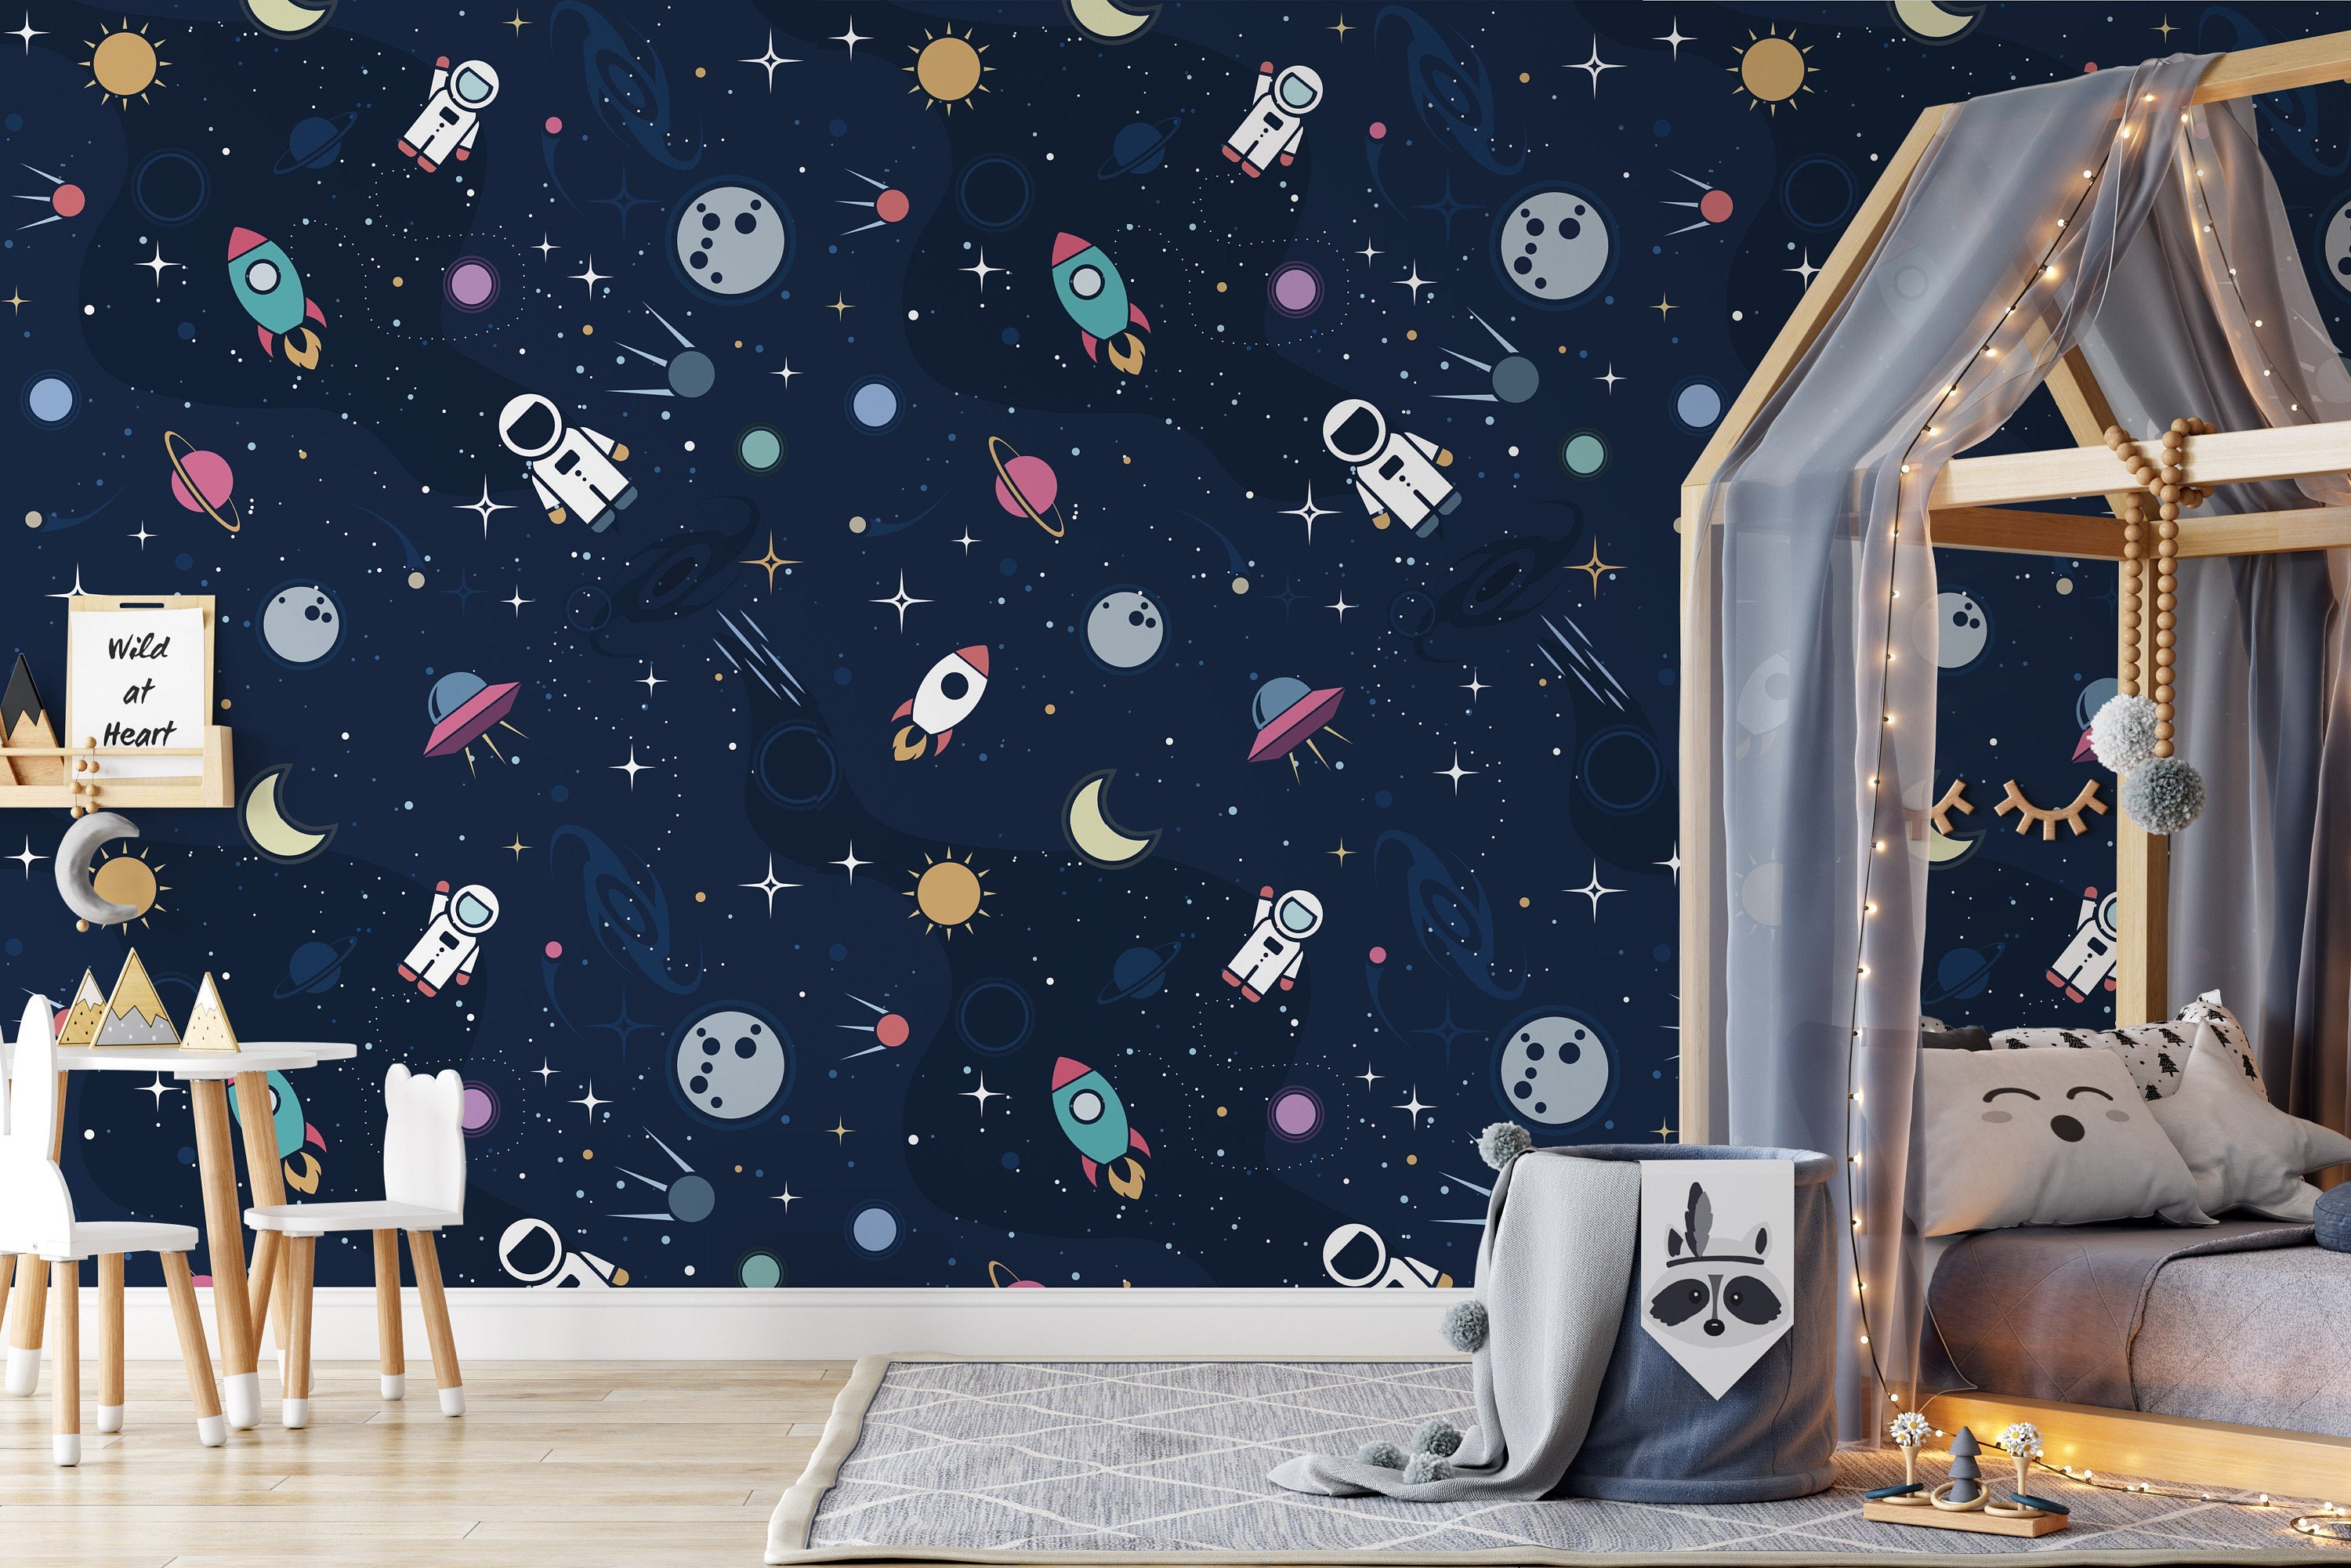 Astronaut Spaceship Rocket Moon Black Hole Funny Wallpaper Bedroom Children Kids Room Mural Home Decor Wall Art